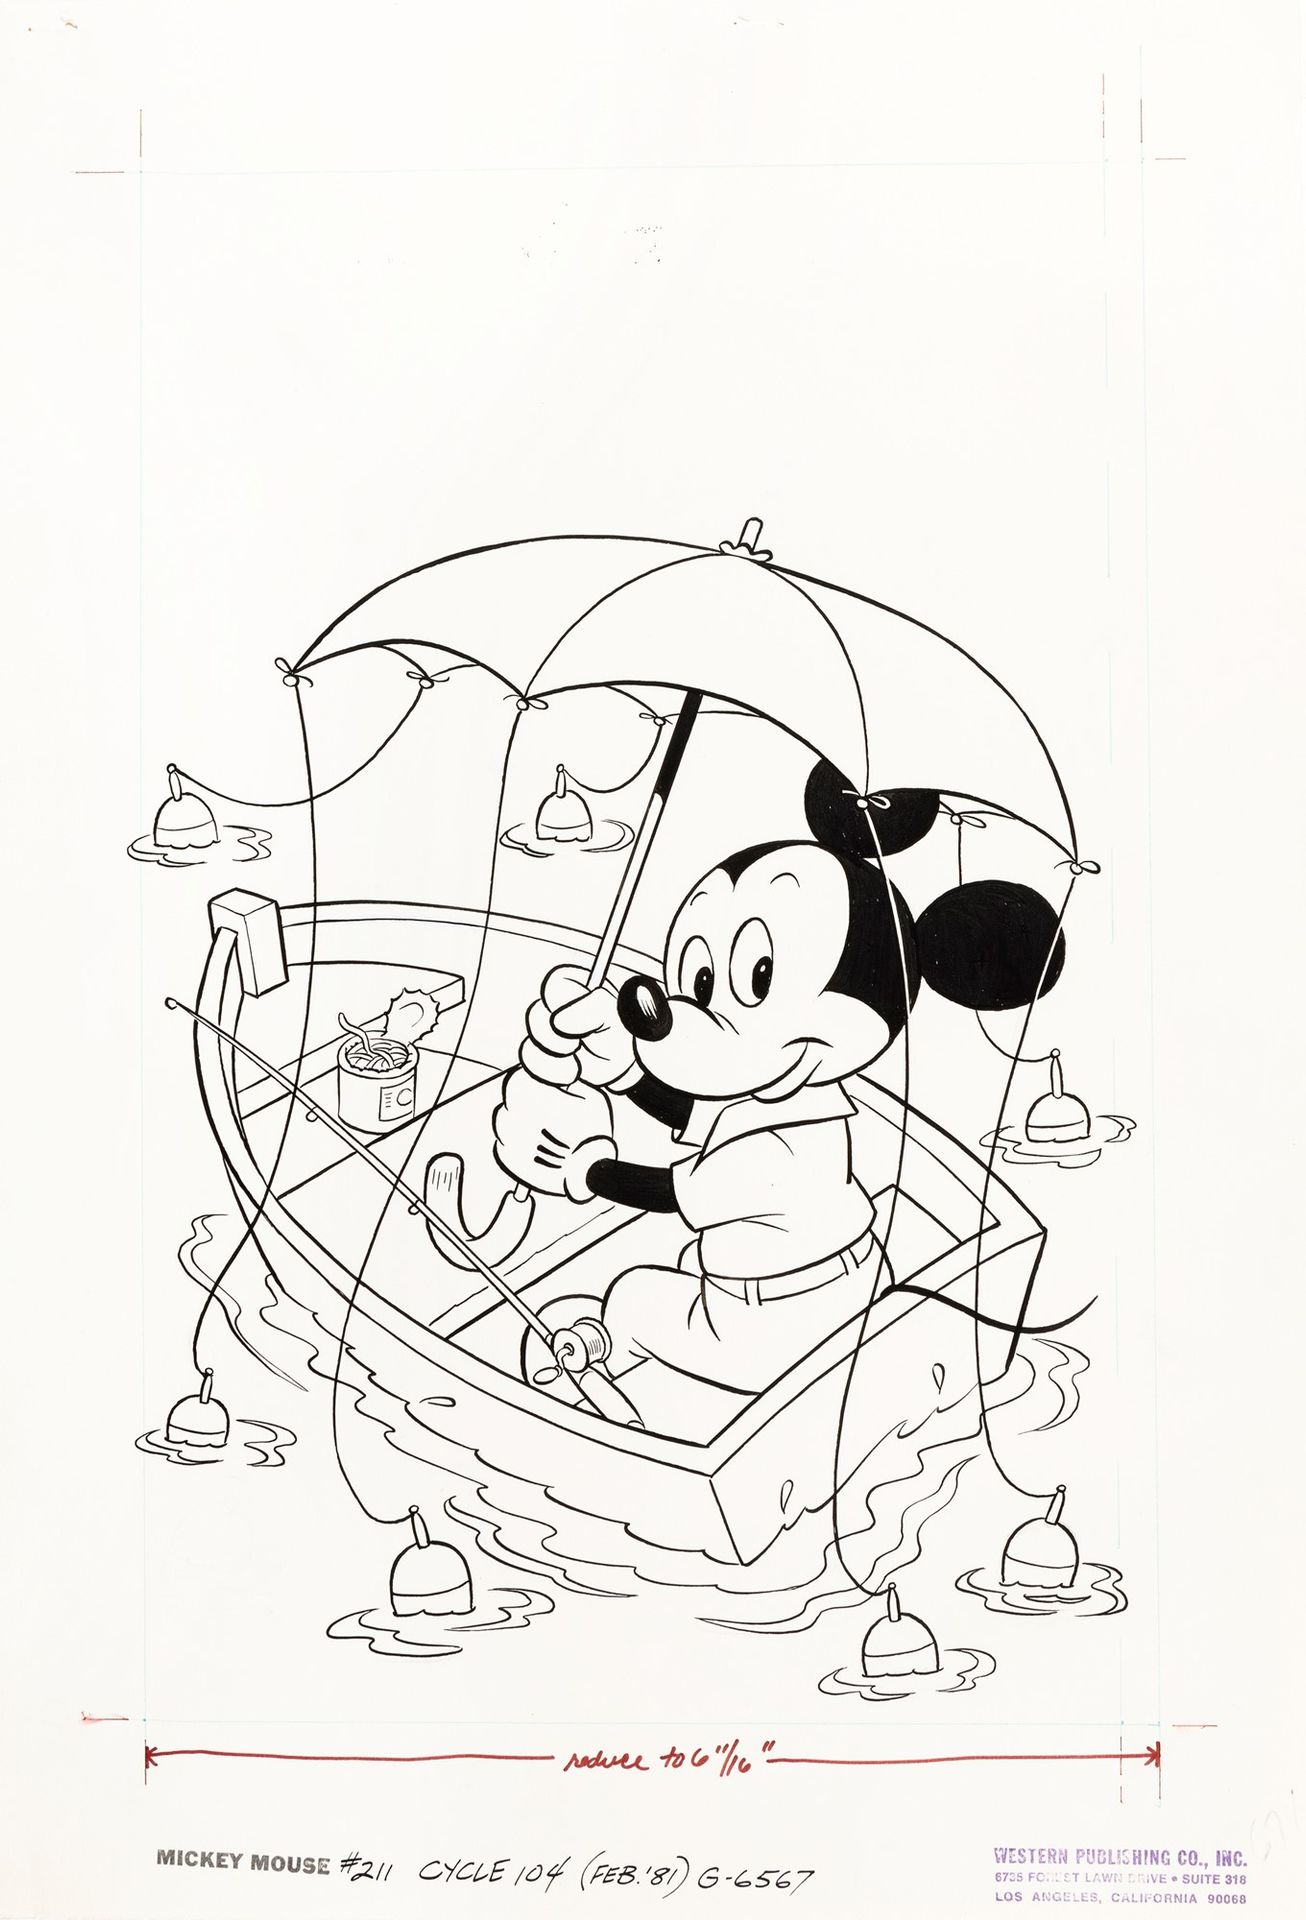 Bill Wright 米老鼠，1981年

薄纸板上的铅笔和墨水
33 x 48 cm
1981年赖特为米老鼠n.211制作的原始封面。